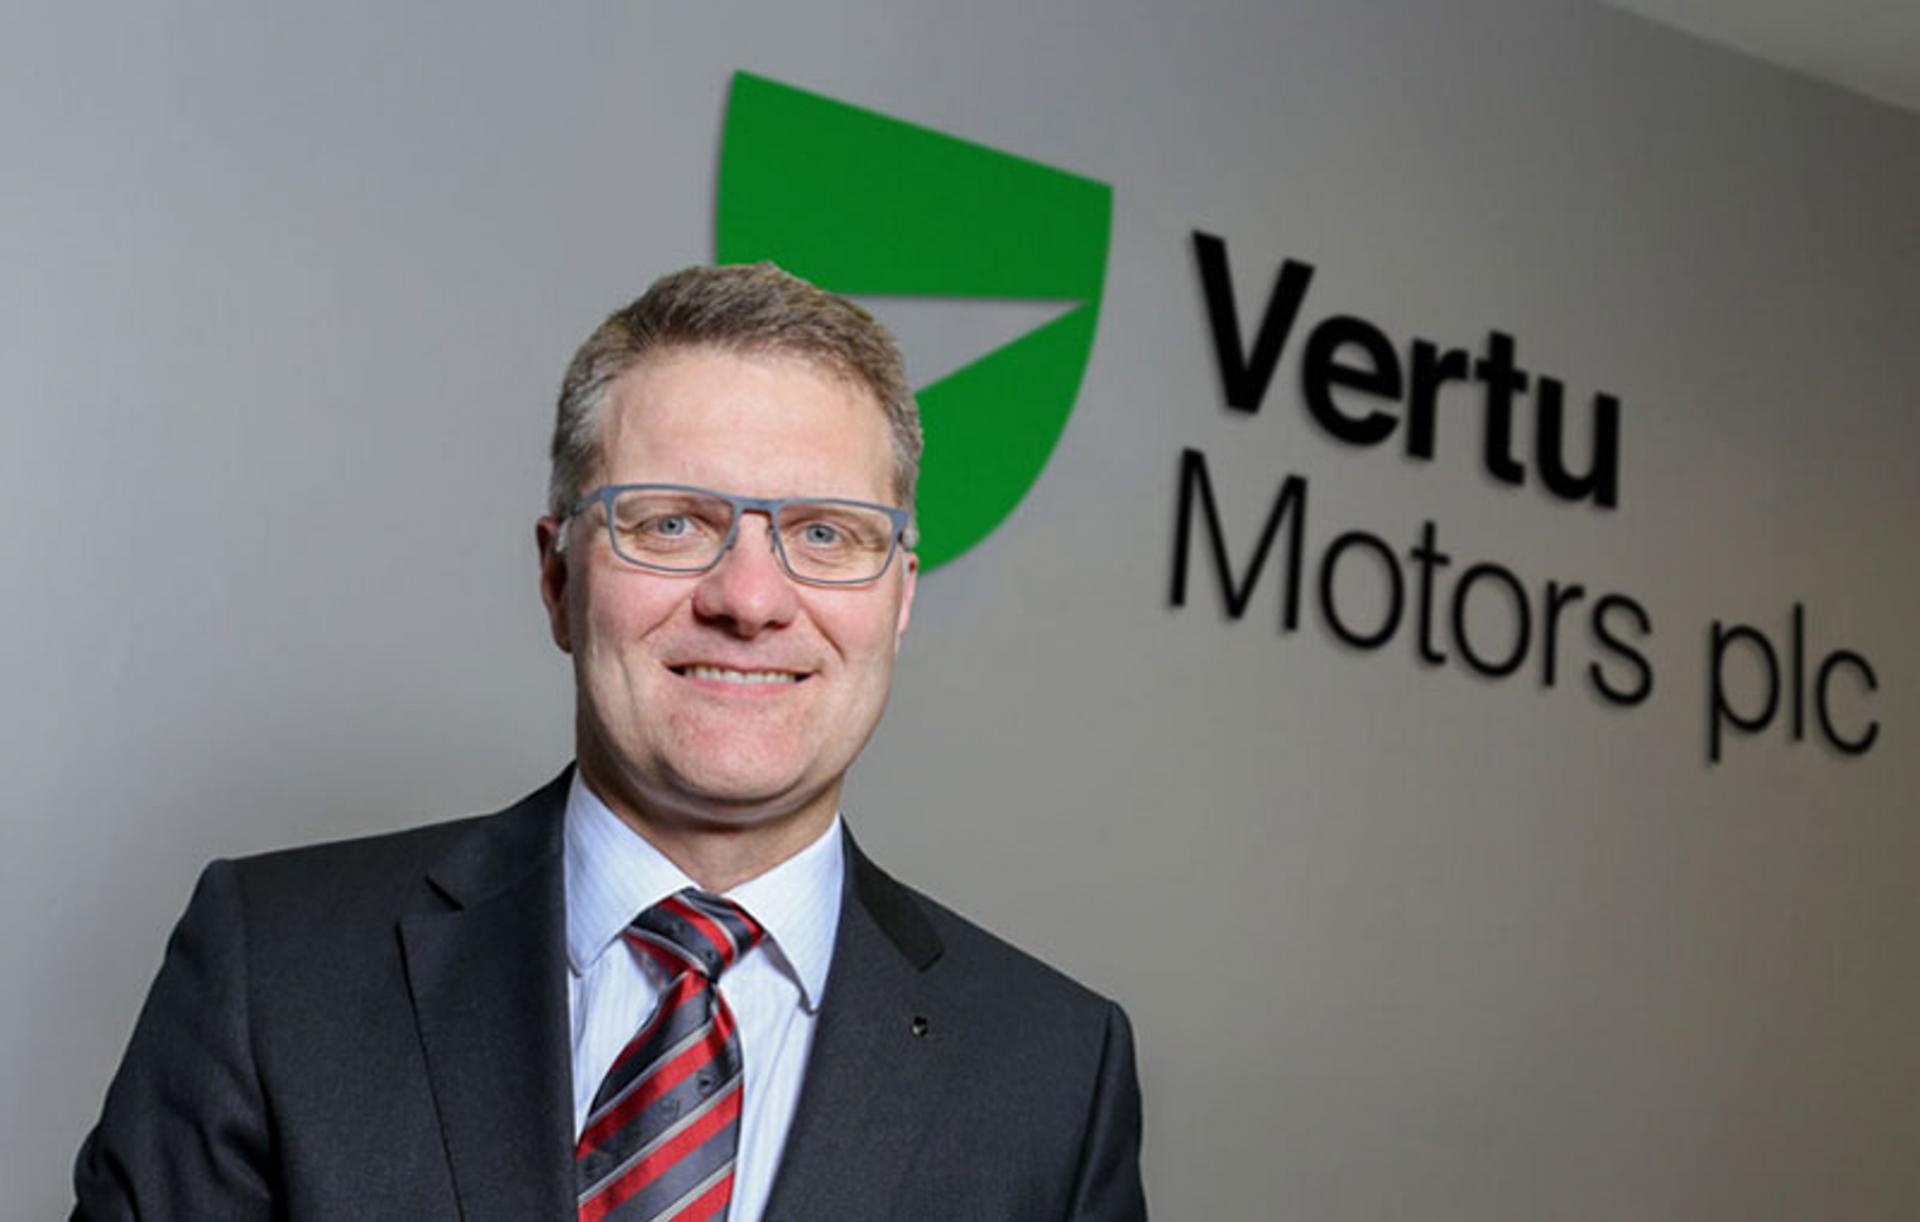 Vertu acquires premier car outlets at 6.8x EBITDA 